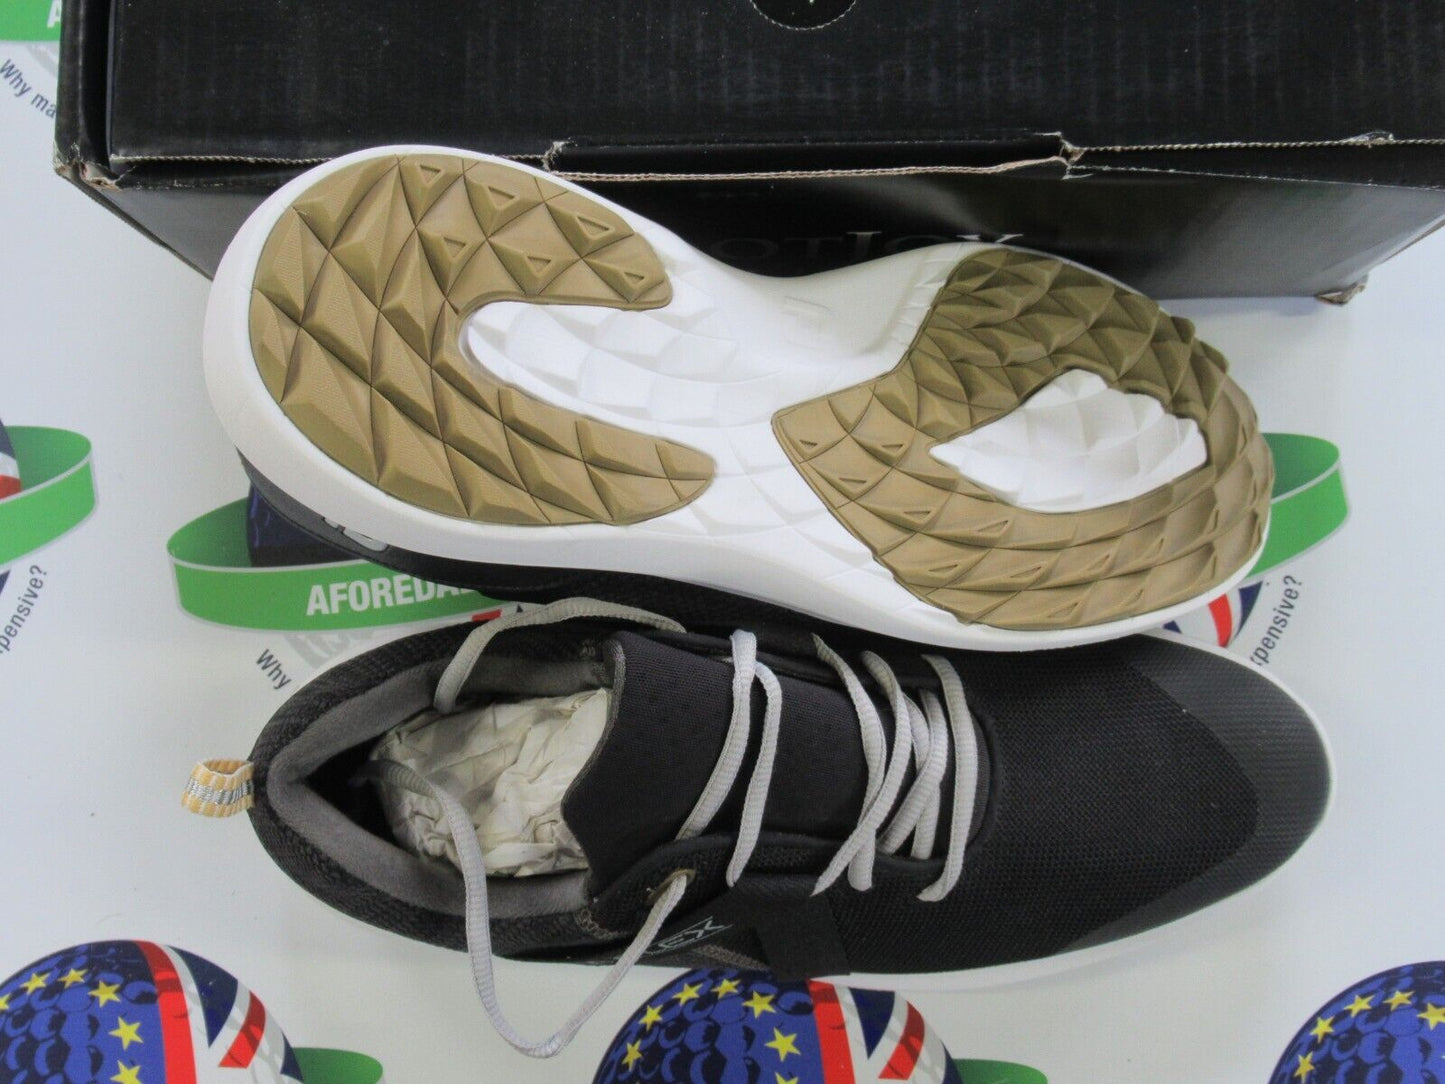 footjoy flex golf shoes 56103k black/white/gold uk size 8.5 medium